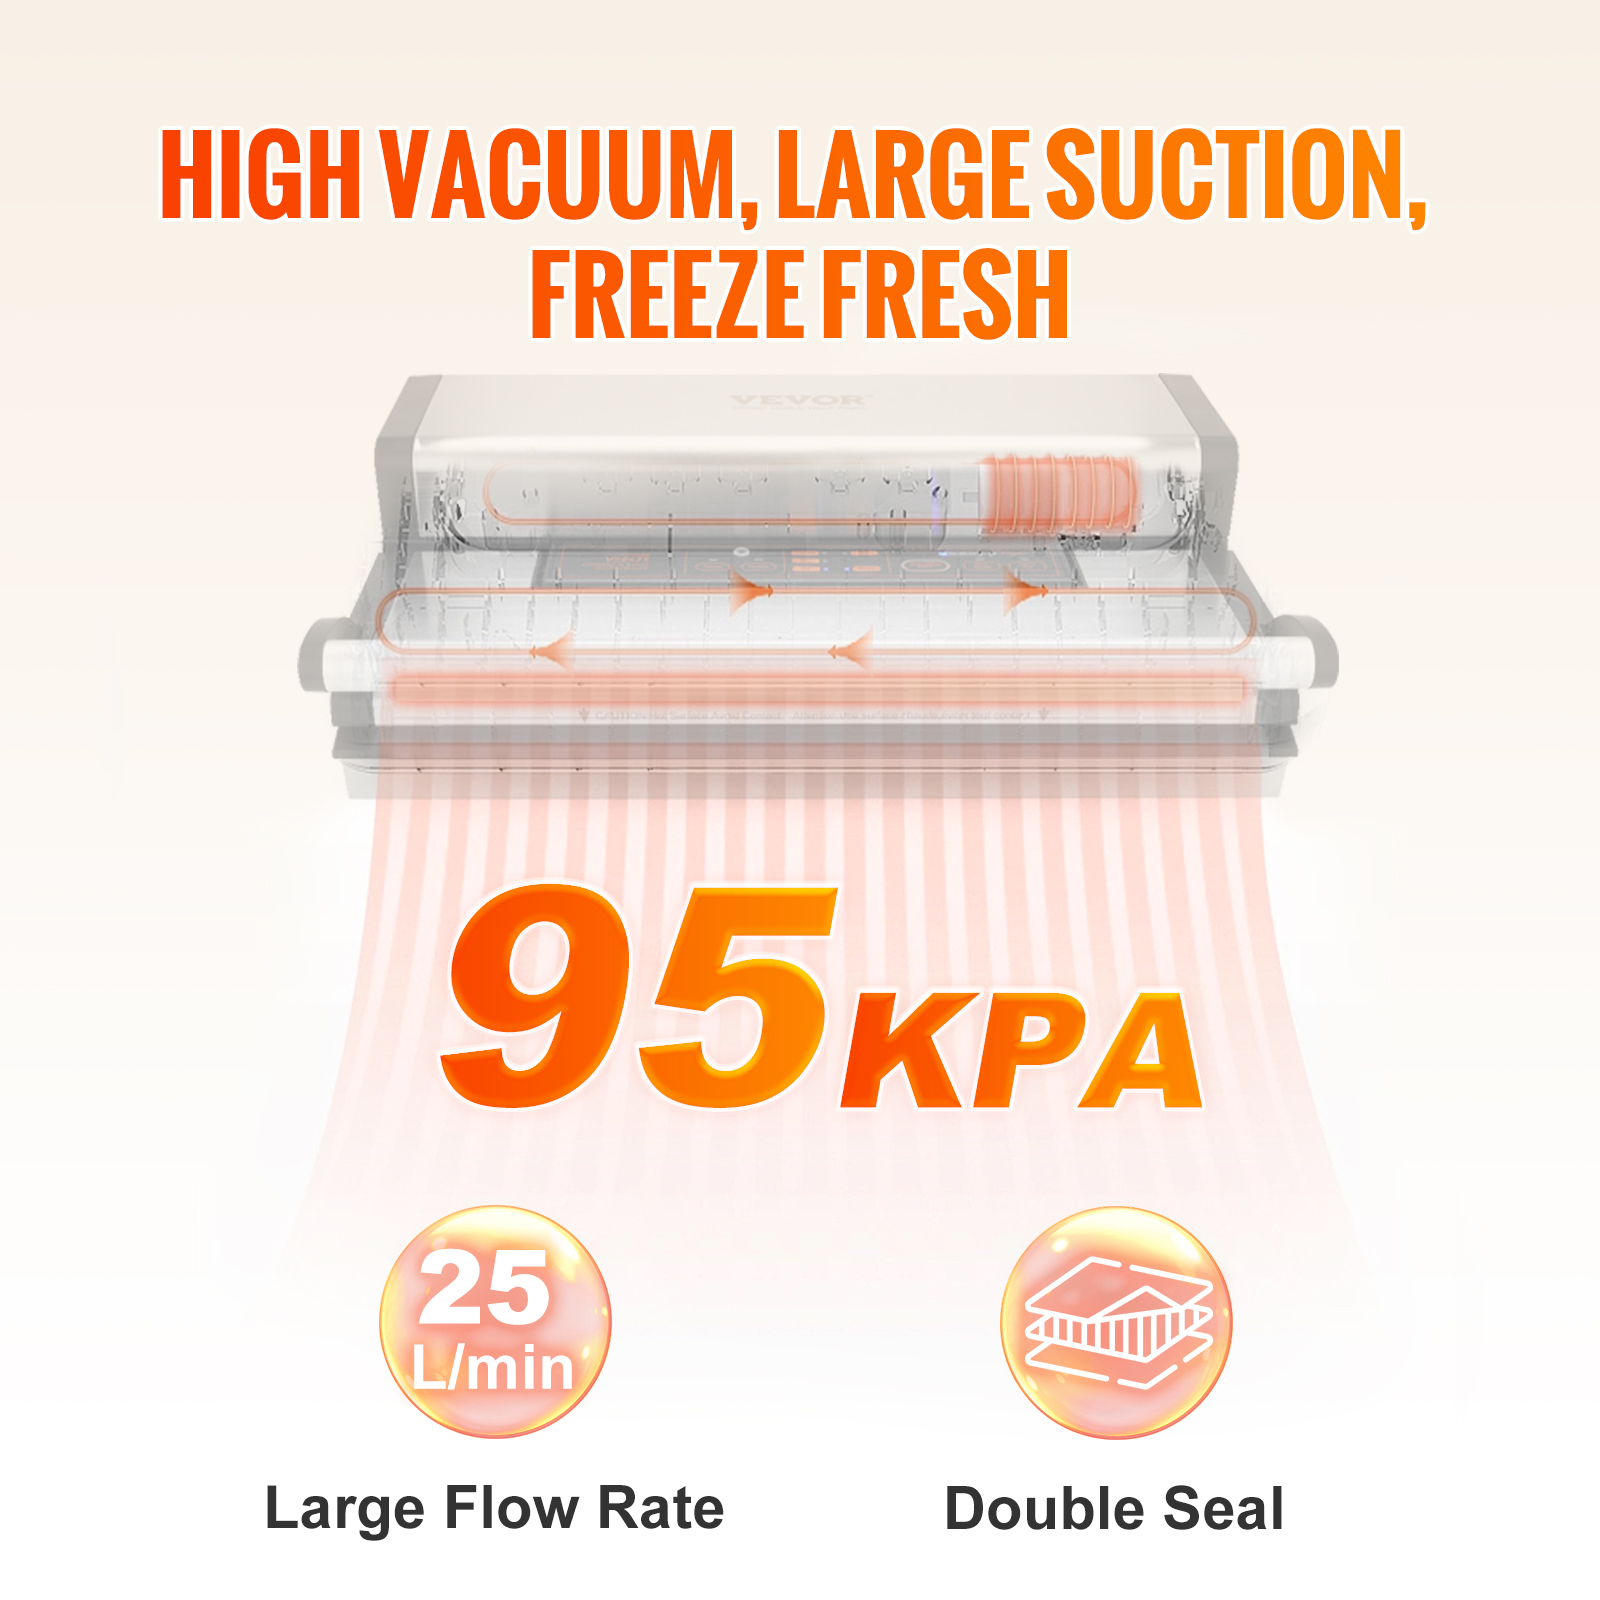 VEVOR Vacuum Sealer Machine 95Kpa 350W Food Vacuum Sealer with Seal  Bag,External Hose and Built-in Cutter,Silver SYJZKFKJTSSB4XCHRV1 - The Home  Depot